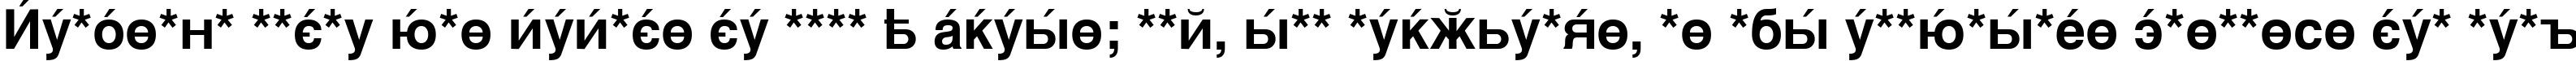 Пример написания шрифтом CyrillicSans Bold текста на испанском